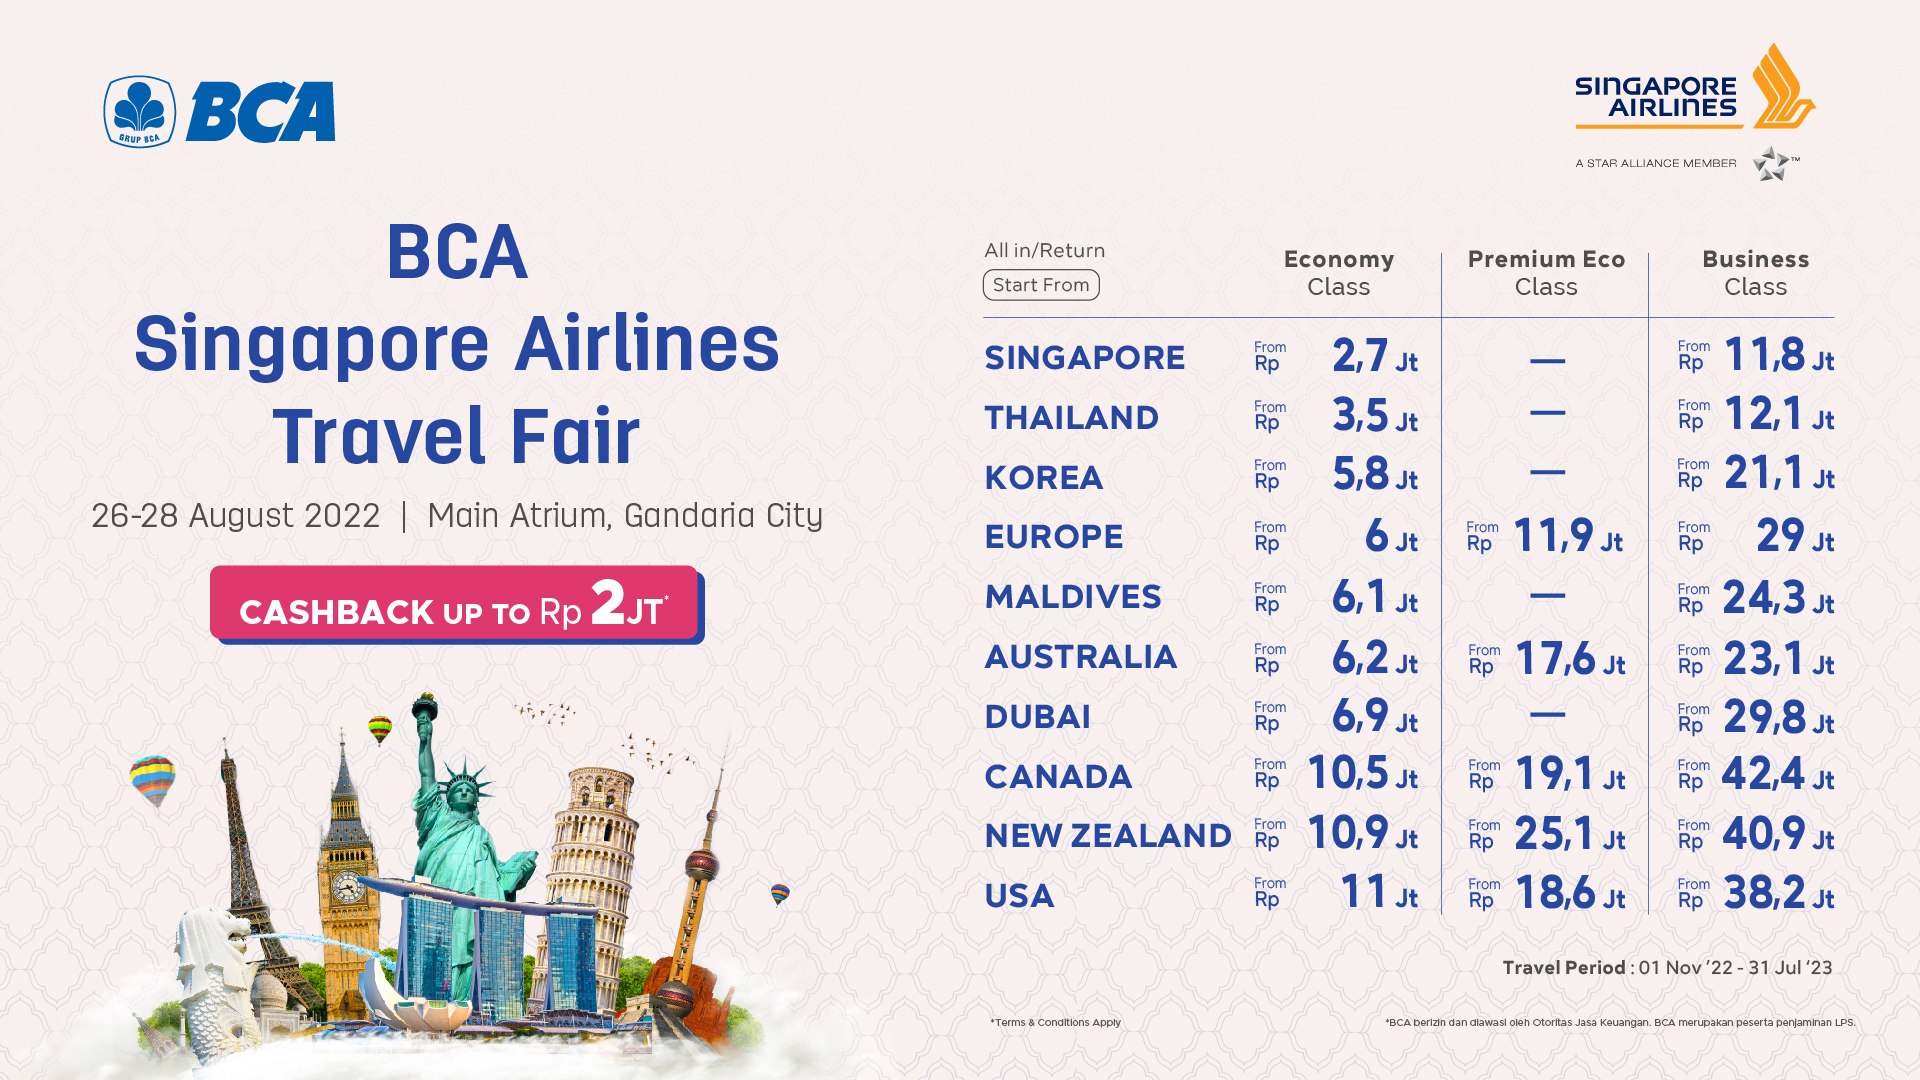 travel fair singapore airlines agustus 2023